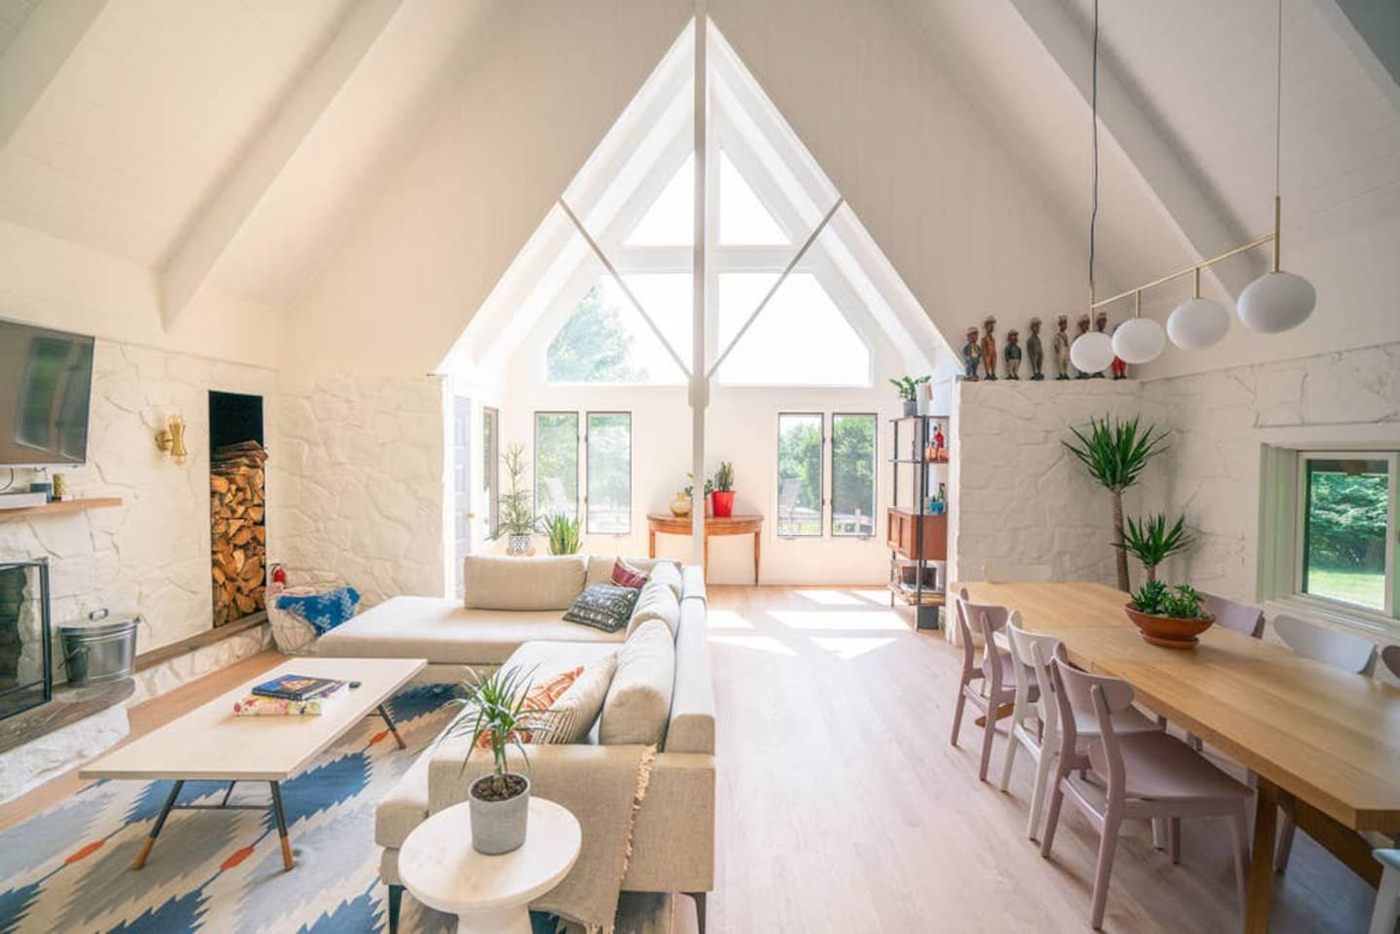 7 Beautiful Airbnbs on My Wish List